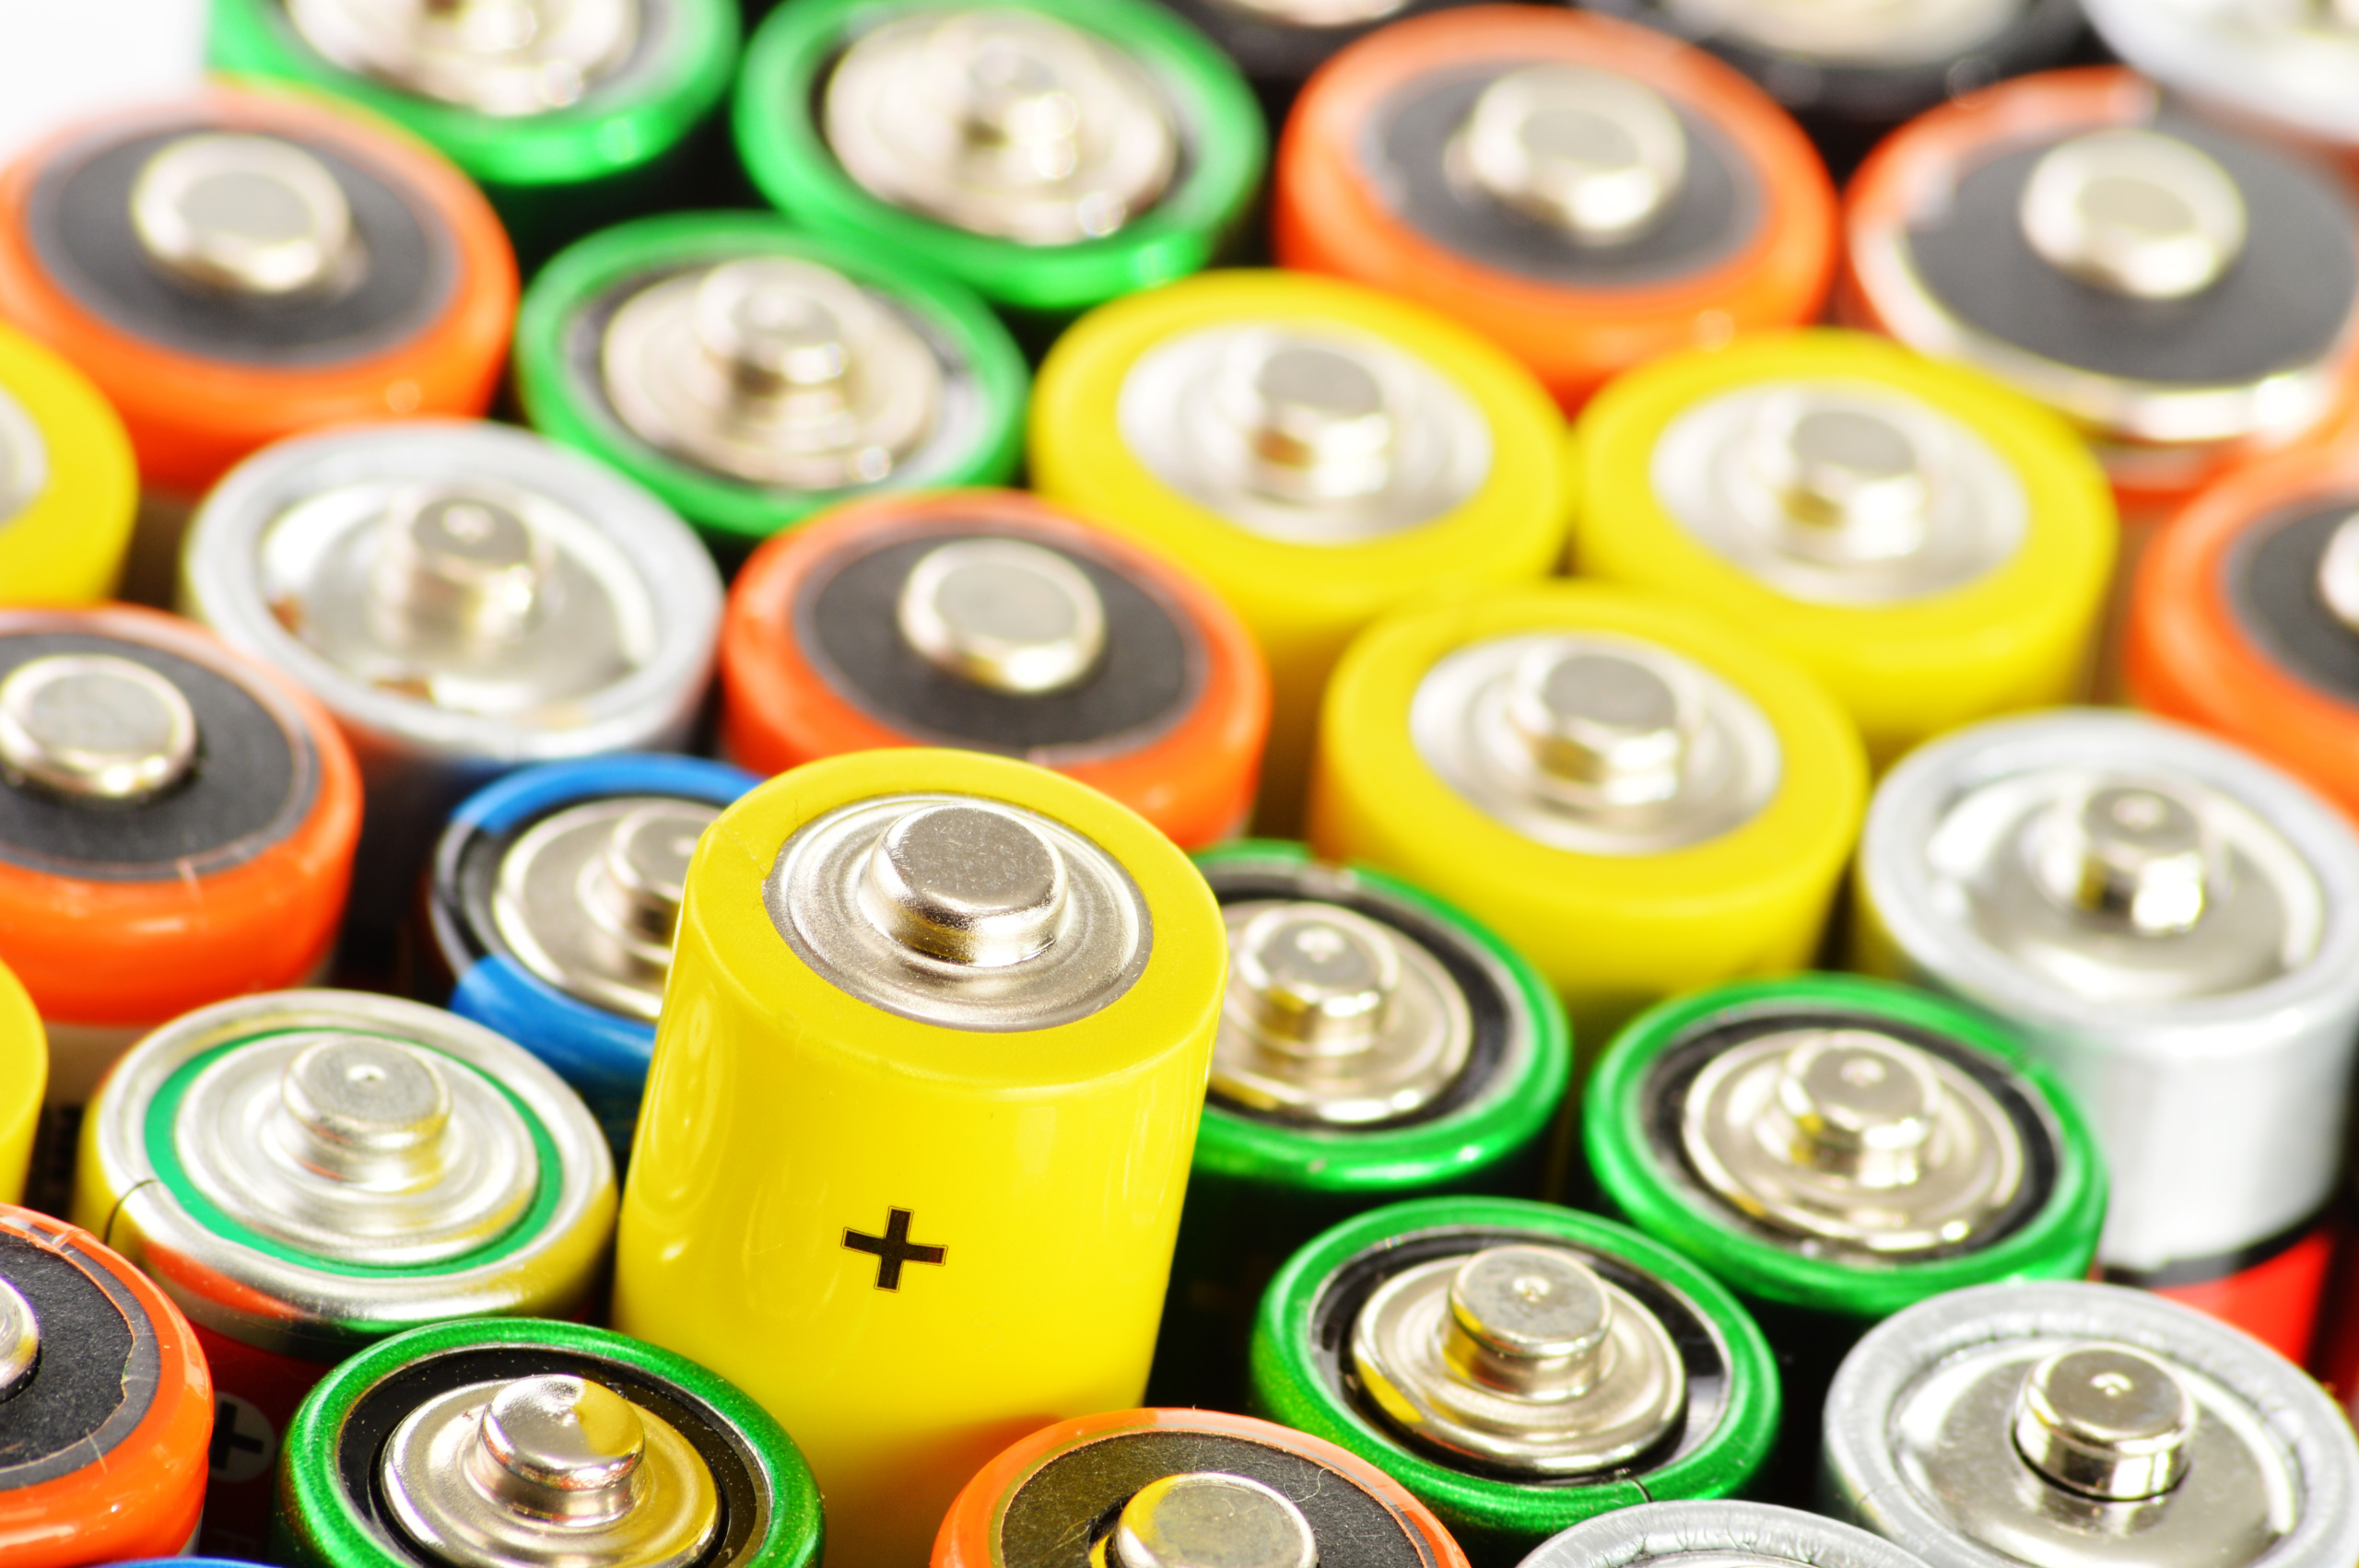 Batteries Regulation for the EU